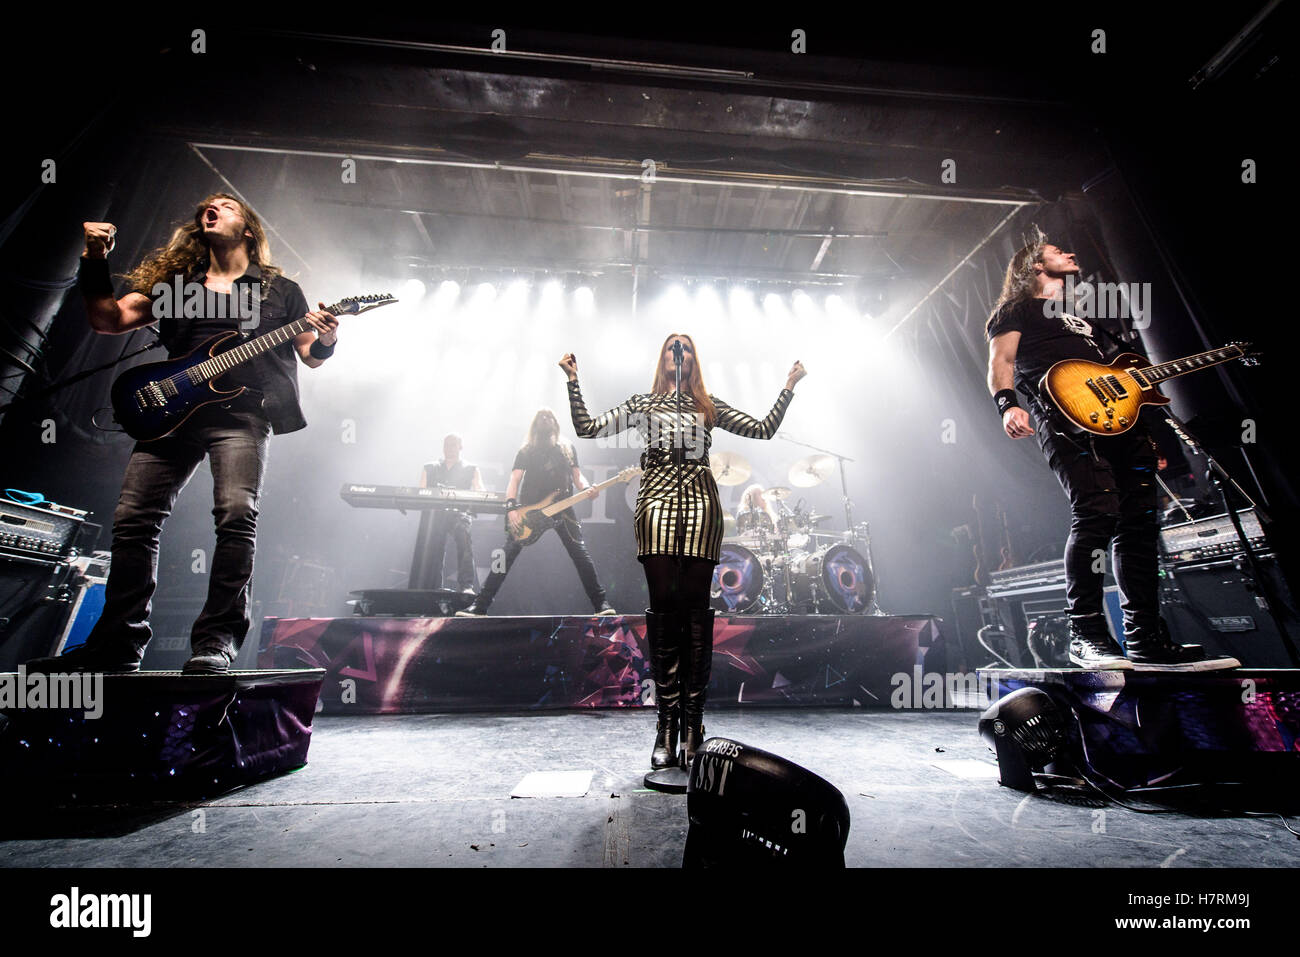 Toronto, Ontario, Canada. 6 Nov, 2016. Olandese symphonic metal band Epica eseguita presso il concerto di Phoenix Theatre di Toronto. I membri della band: MARK JANSEN, COEN JANSSEN, SIMONE SIMONS, ARIÃ'N VAN WEESENBEEK, ISAAC DELAHAYE, ROB VAN DER LOO © Igor Vidyashev/ZUMA filo/Alamy Live News Foto Stock